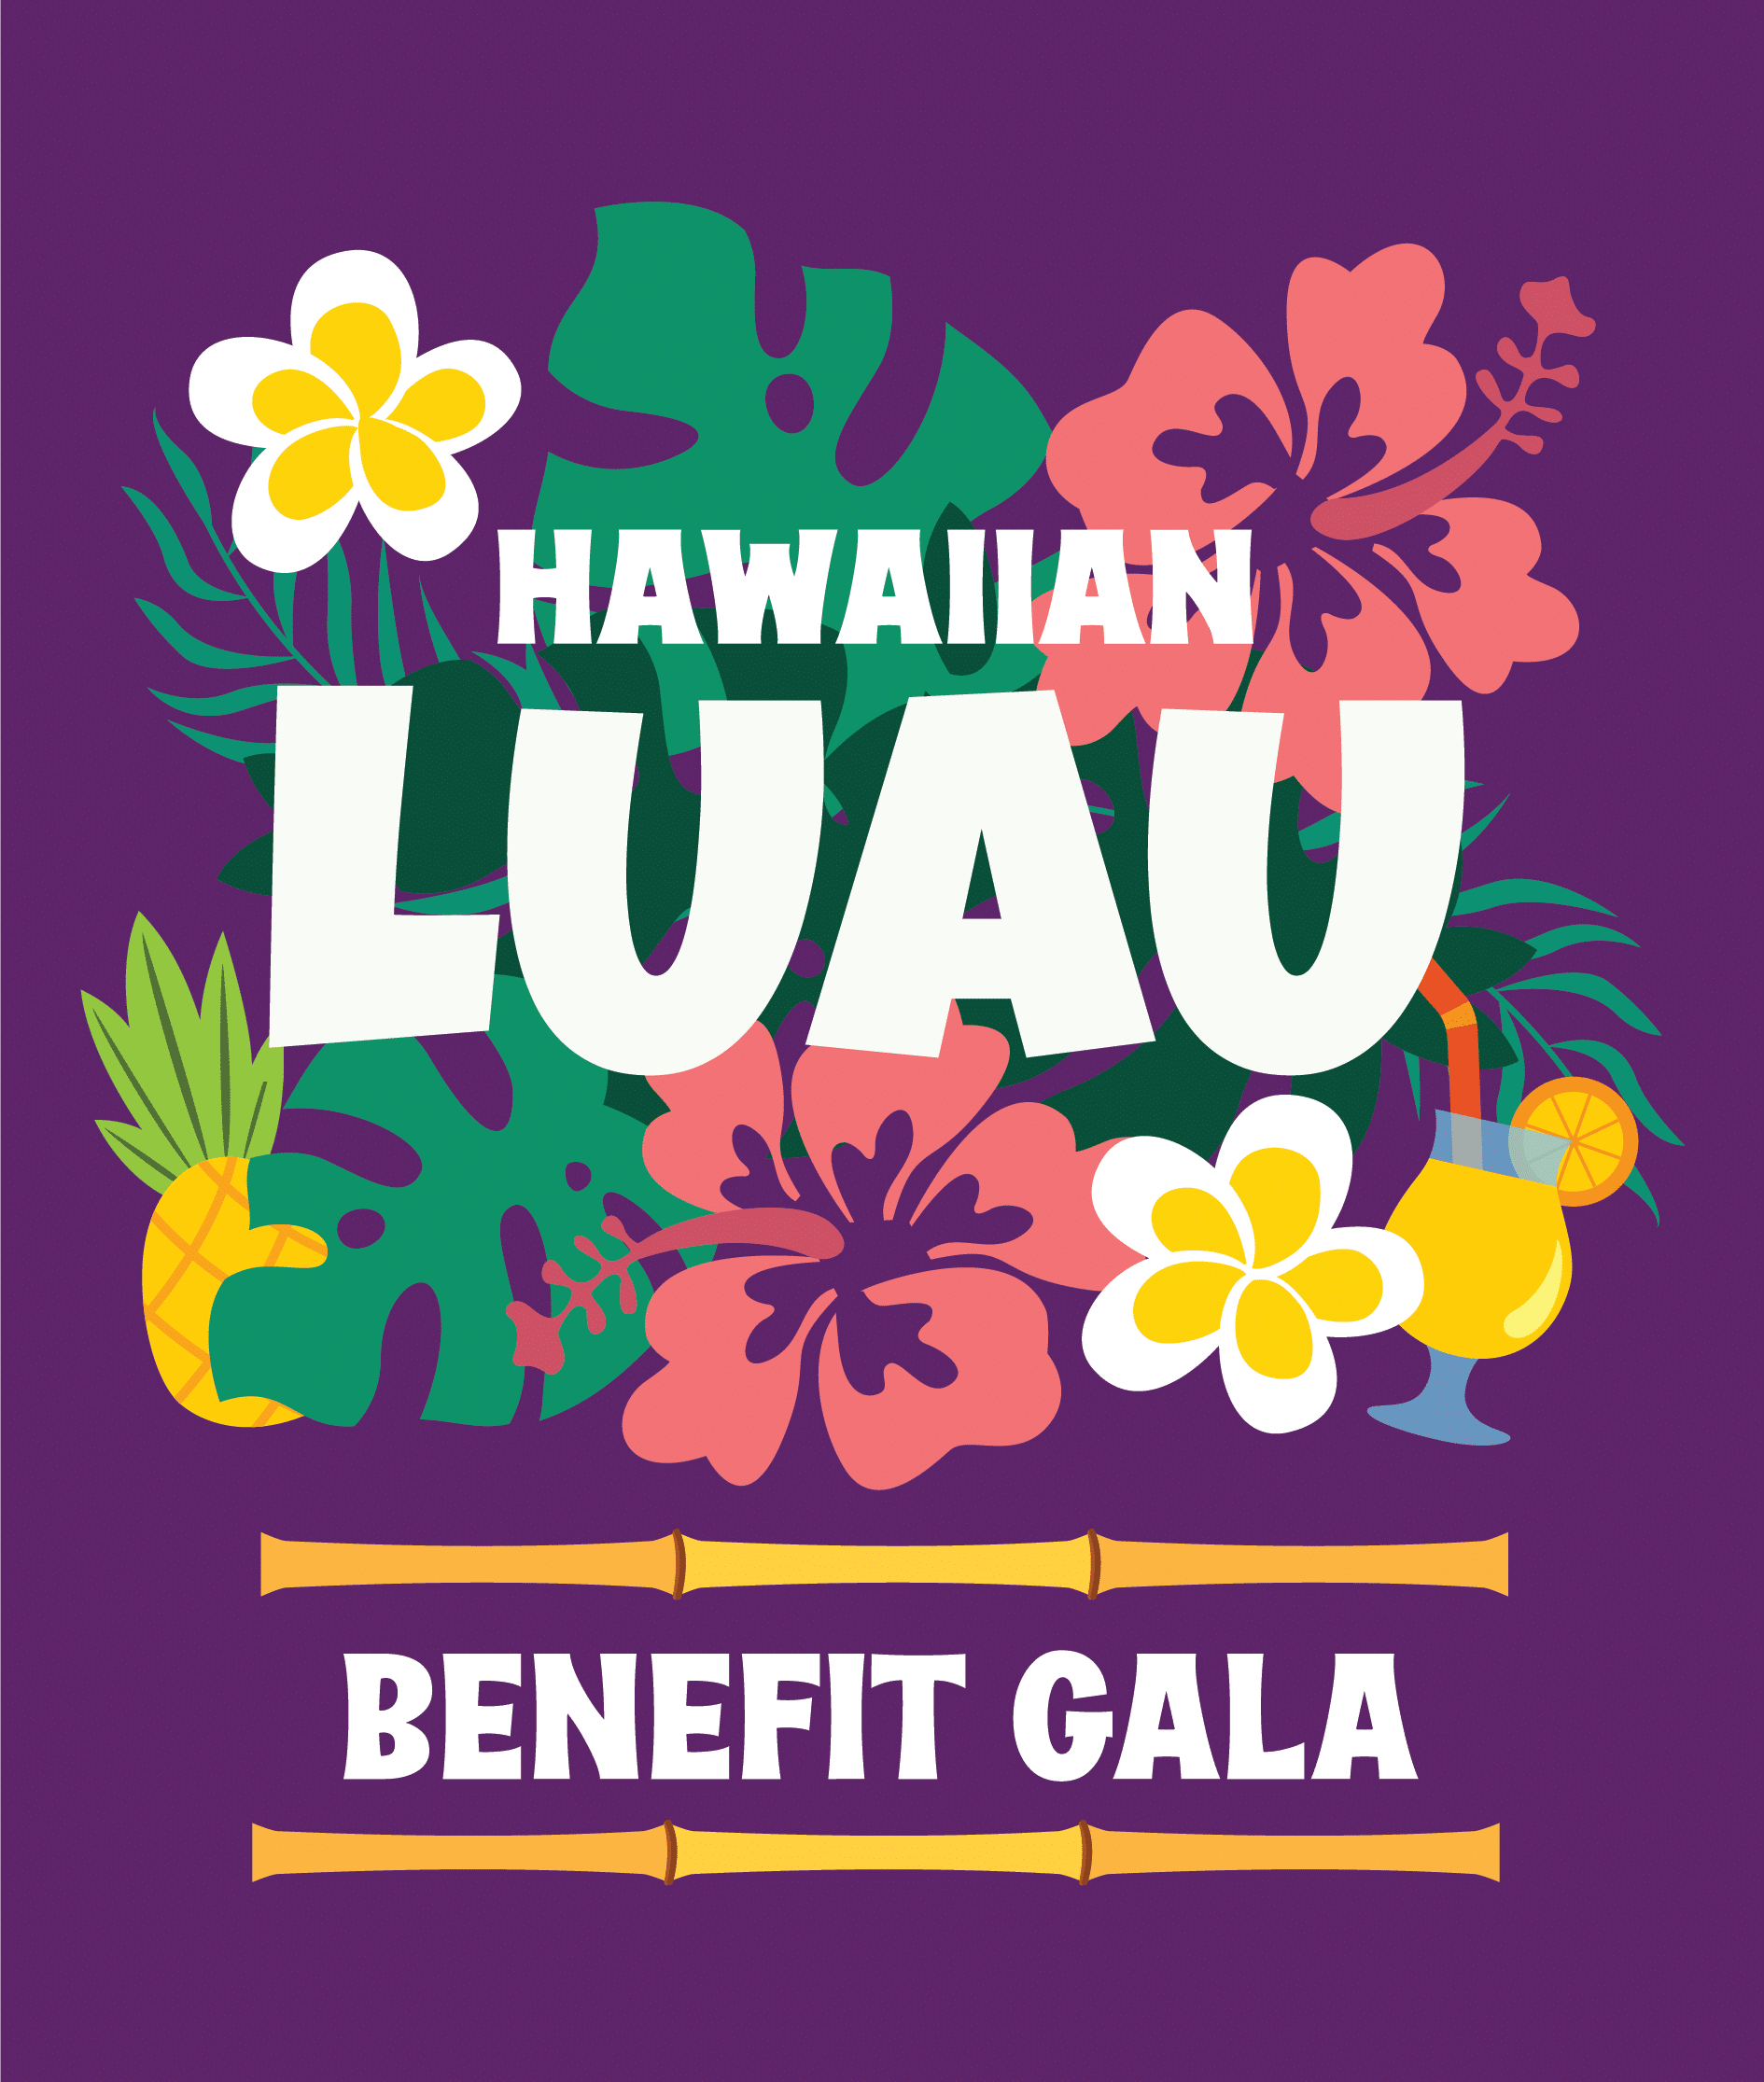 Hawaiian Luau Benefit Gala graphic